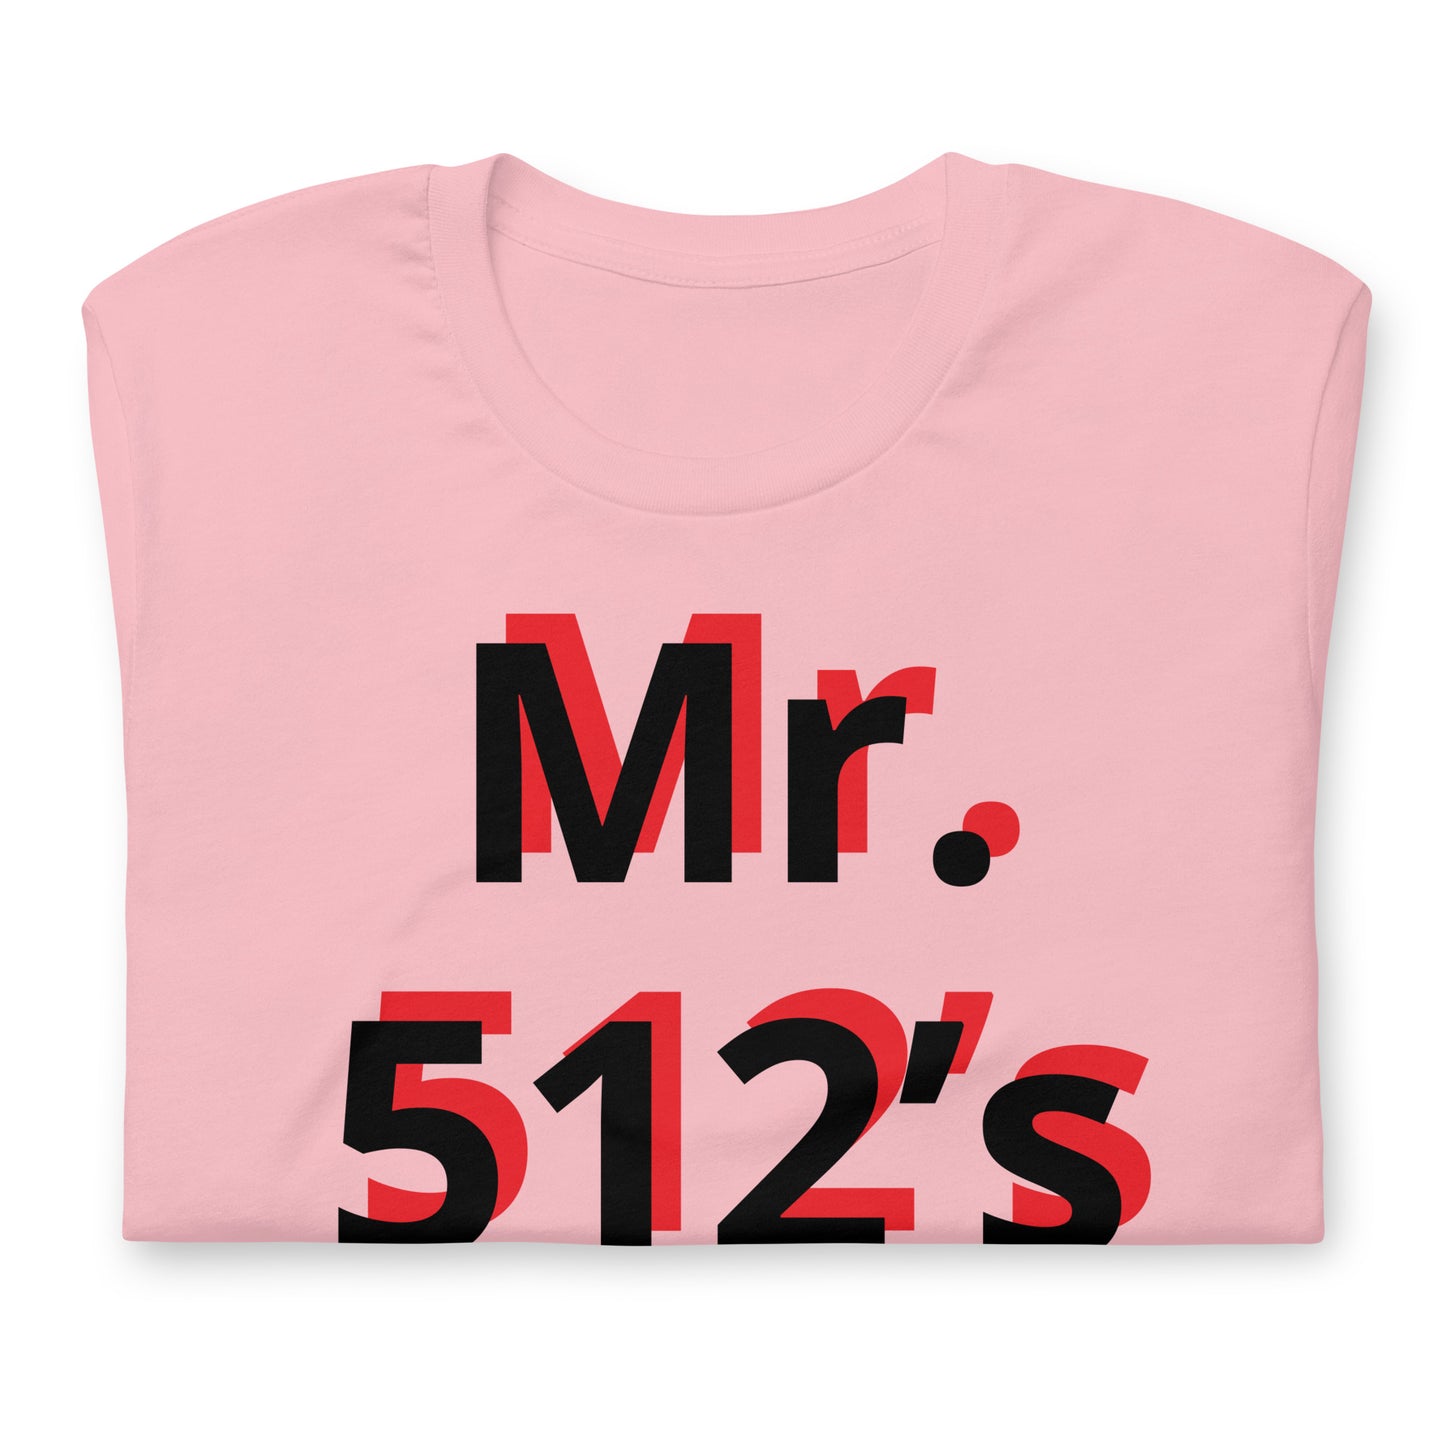 Andreco B. “Mr. 512’s  t-shirt